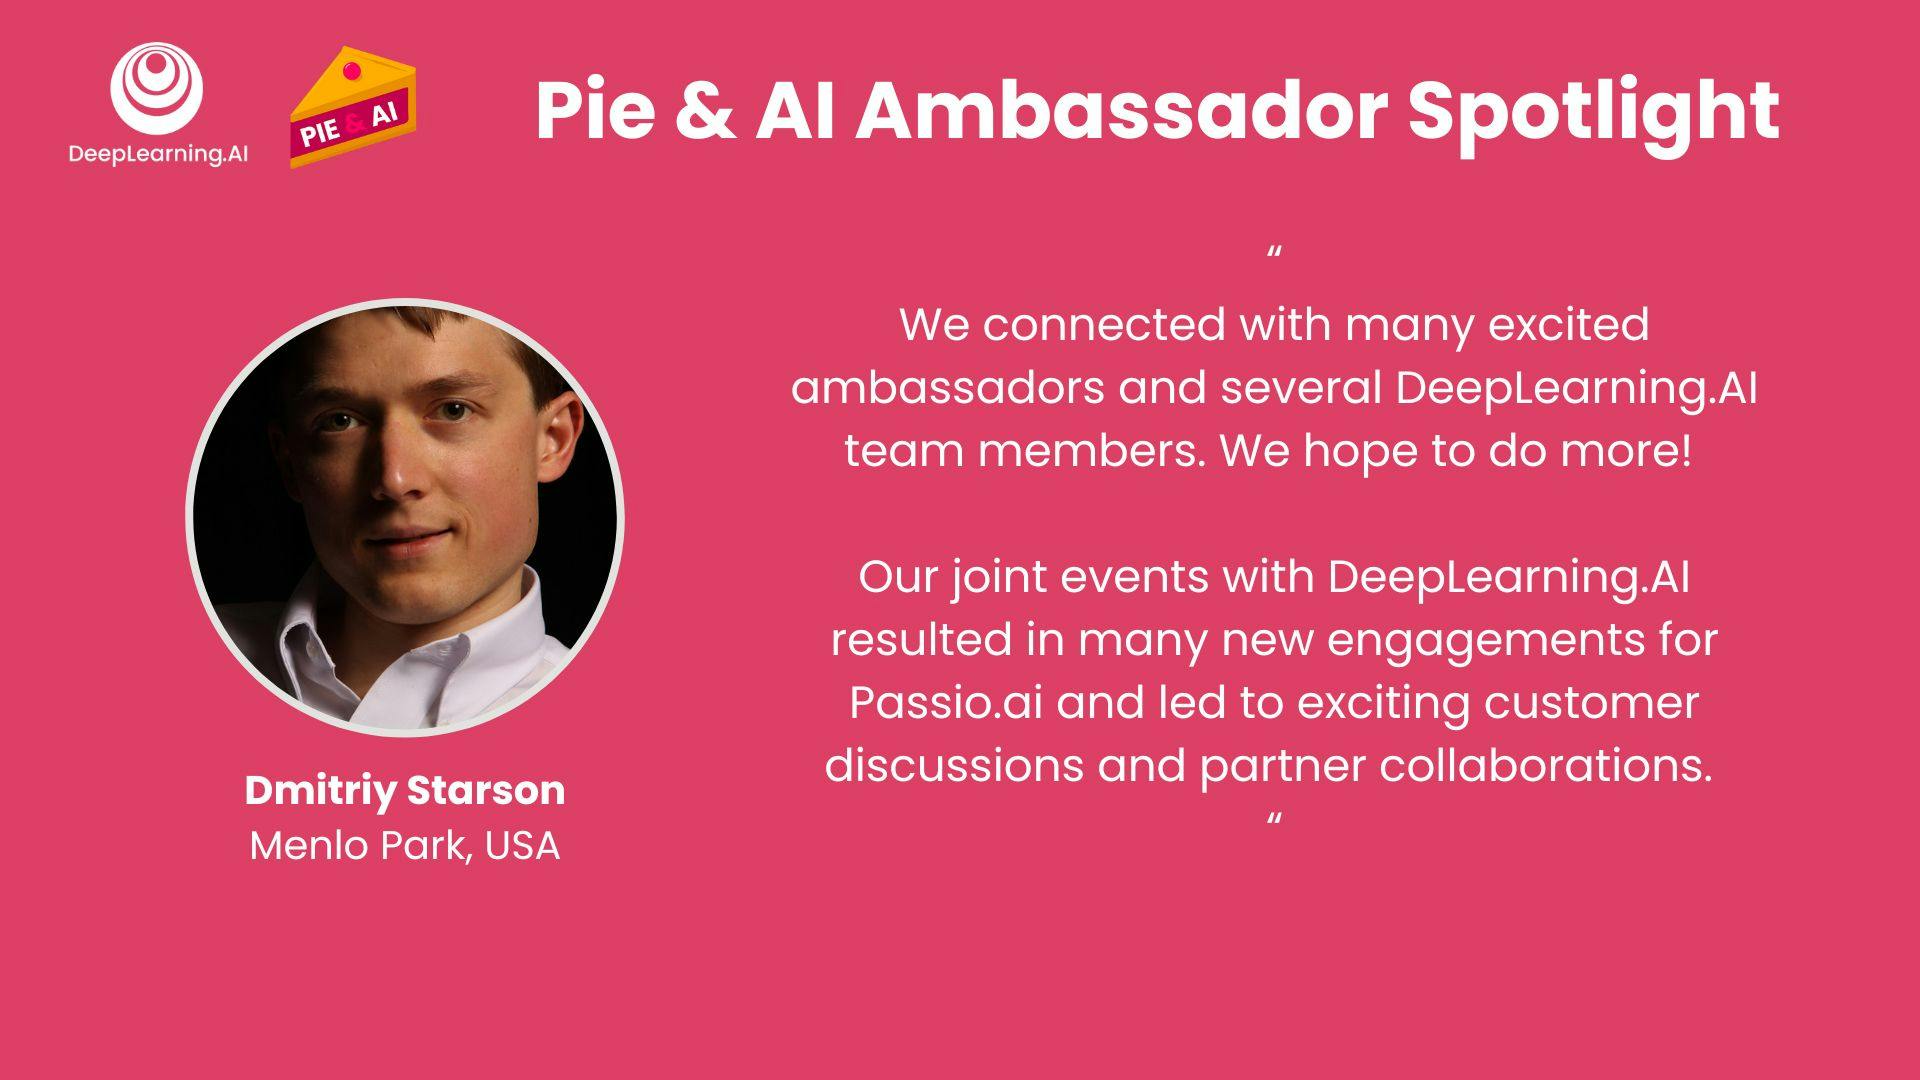 Pie&AI Ambassador from Menlo Park, U.S. Dmitriy Starson